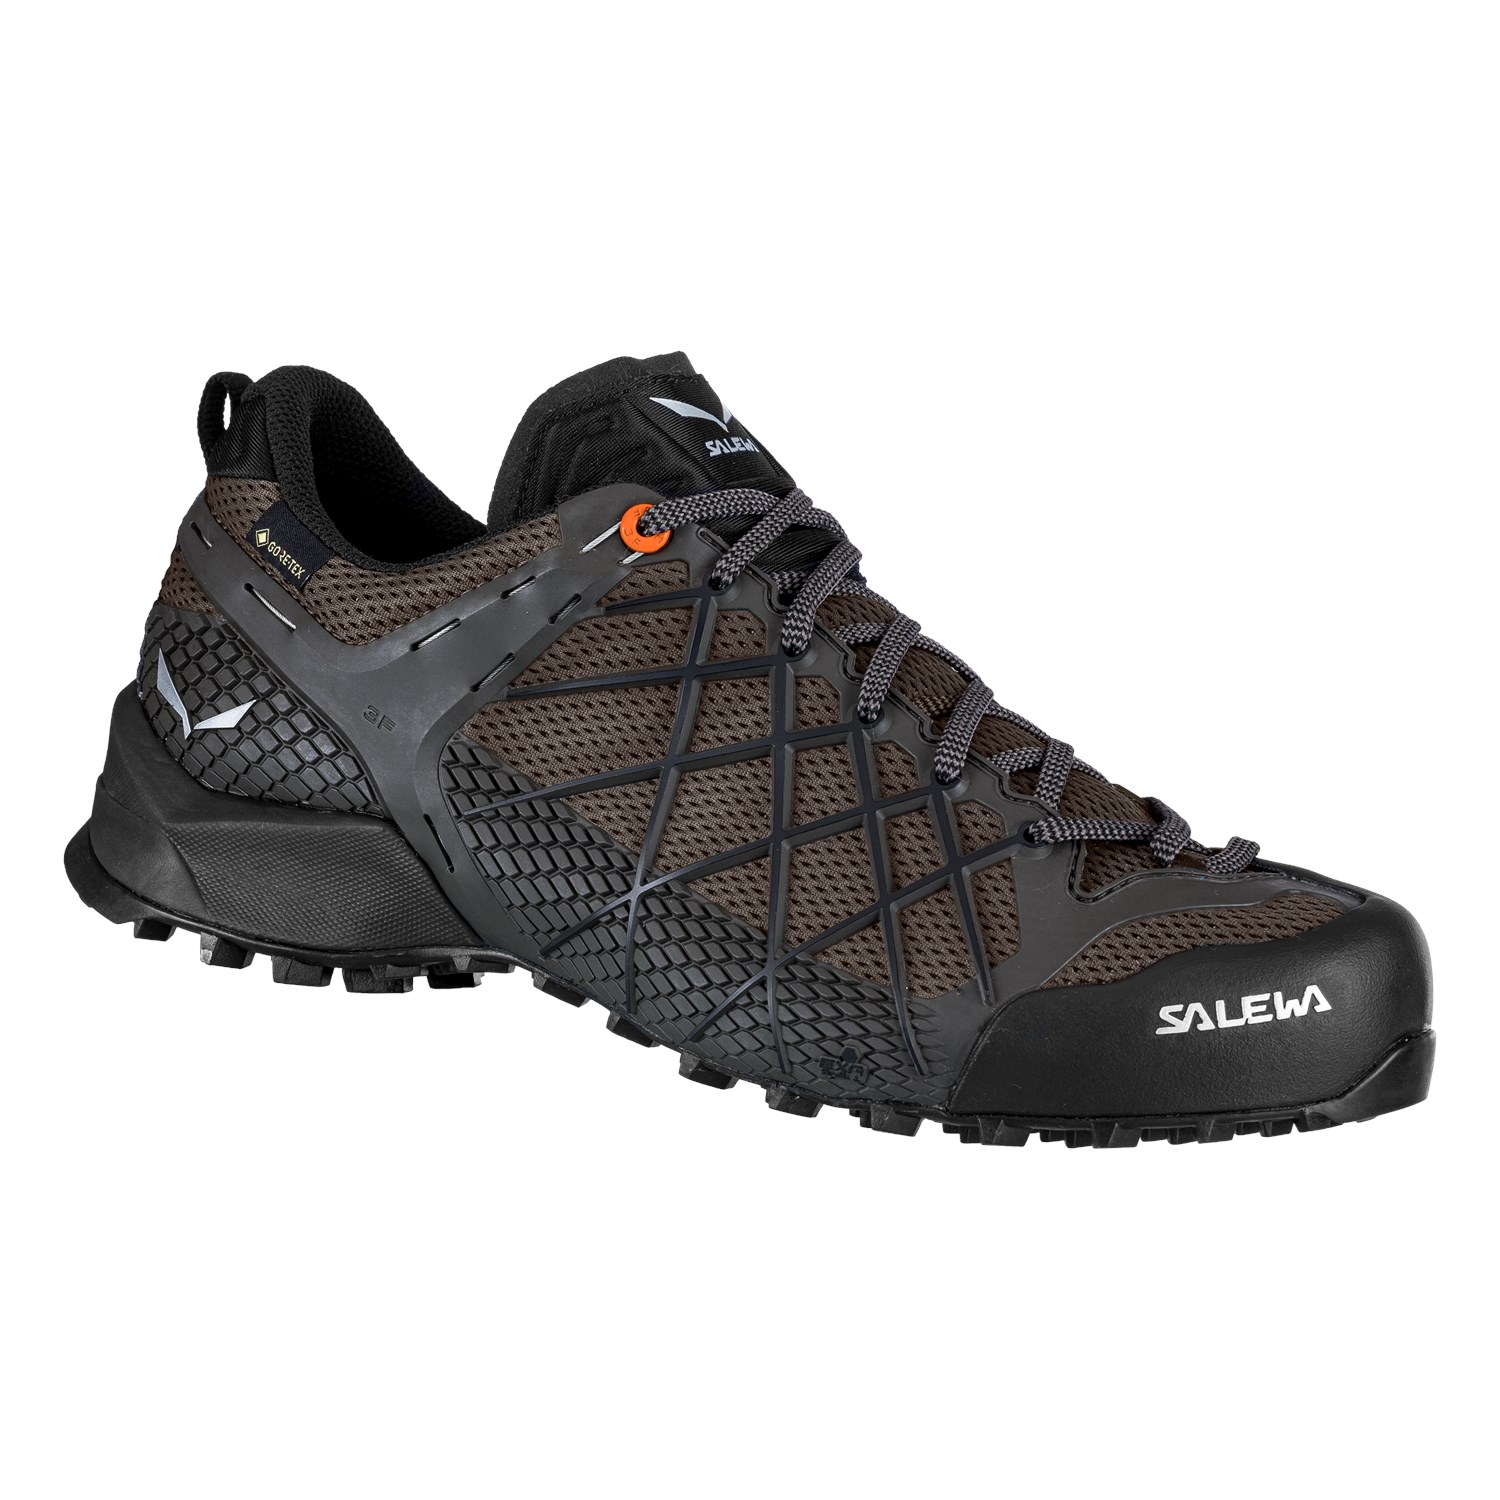 Salewa Mens Wildfire GORE-TEX Walking Shoes Brown Sports Outdoors Waterproof 